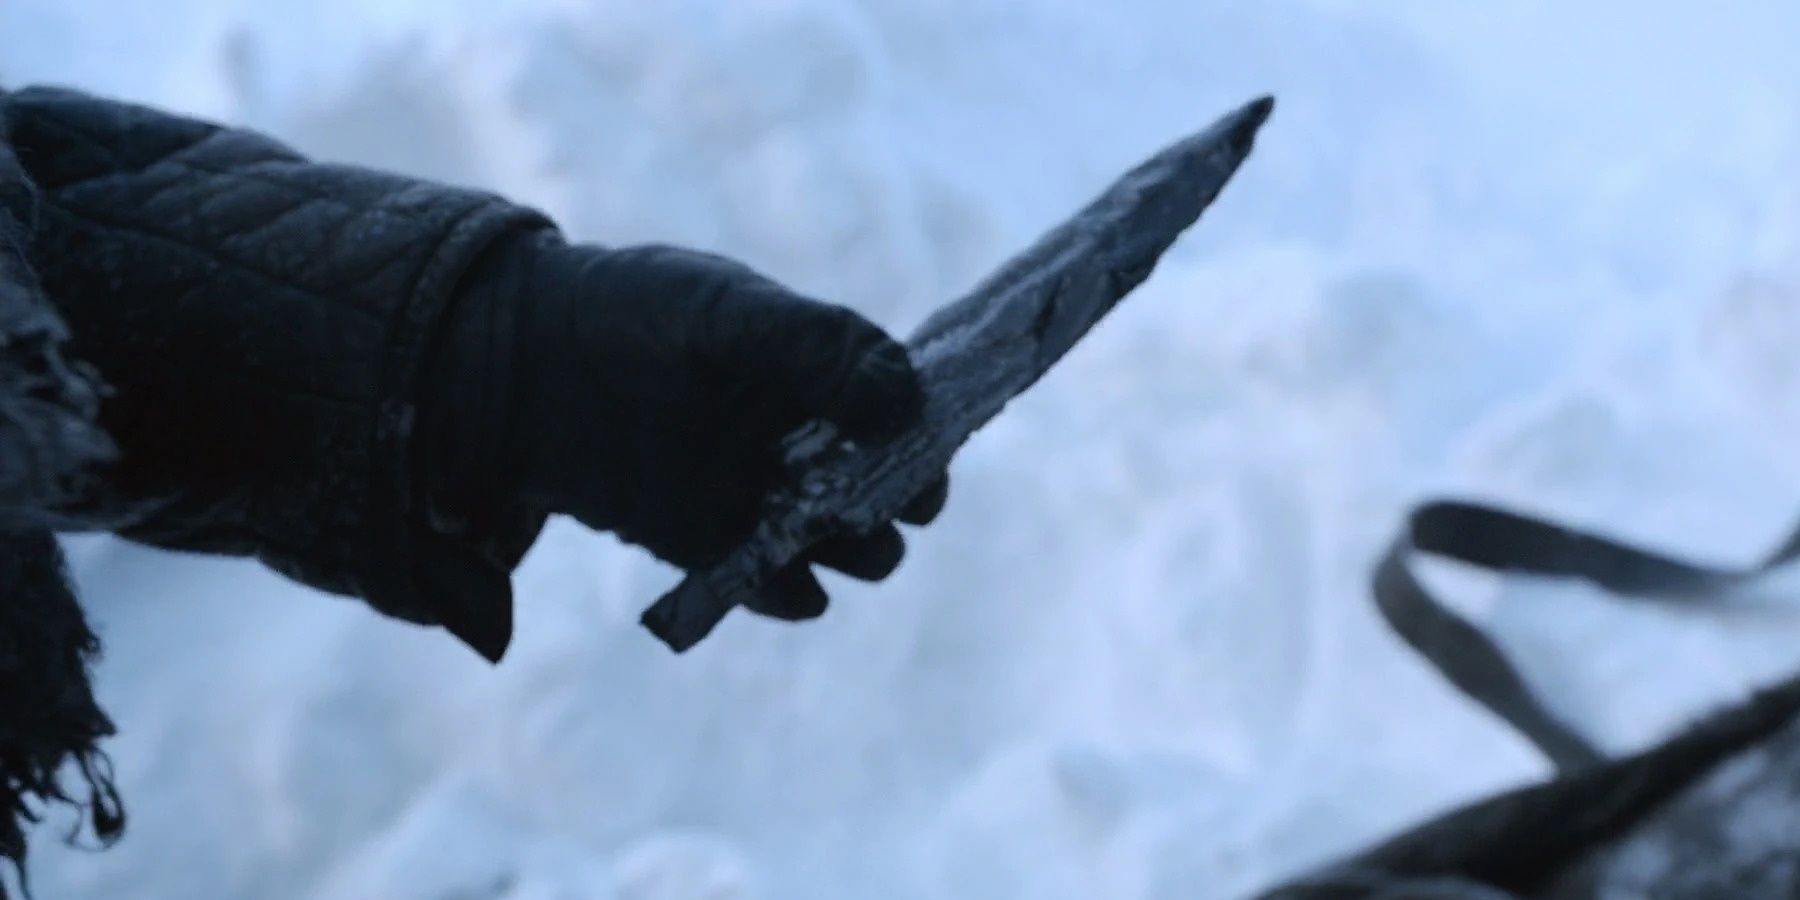 Game Of Thrones: une main saisit une pointe de lance en verredragon